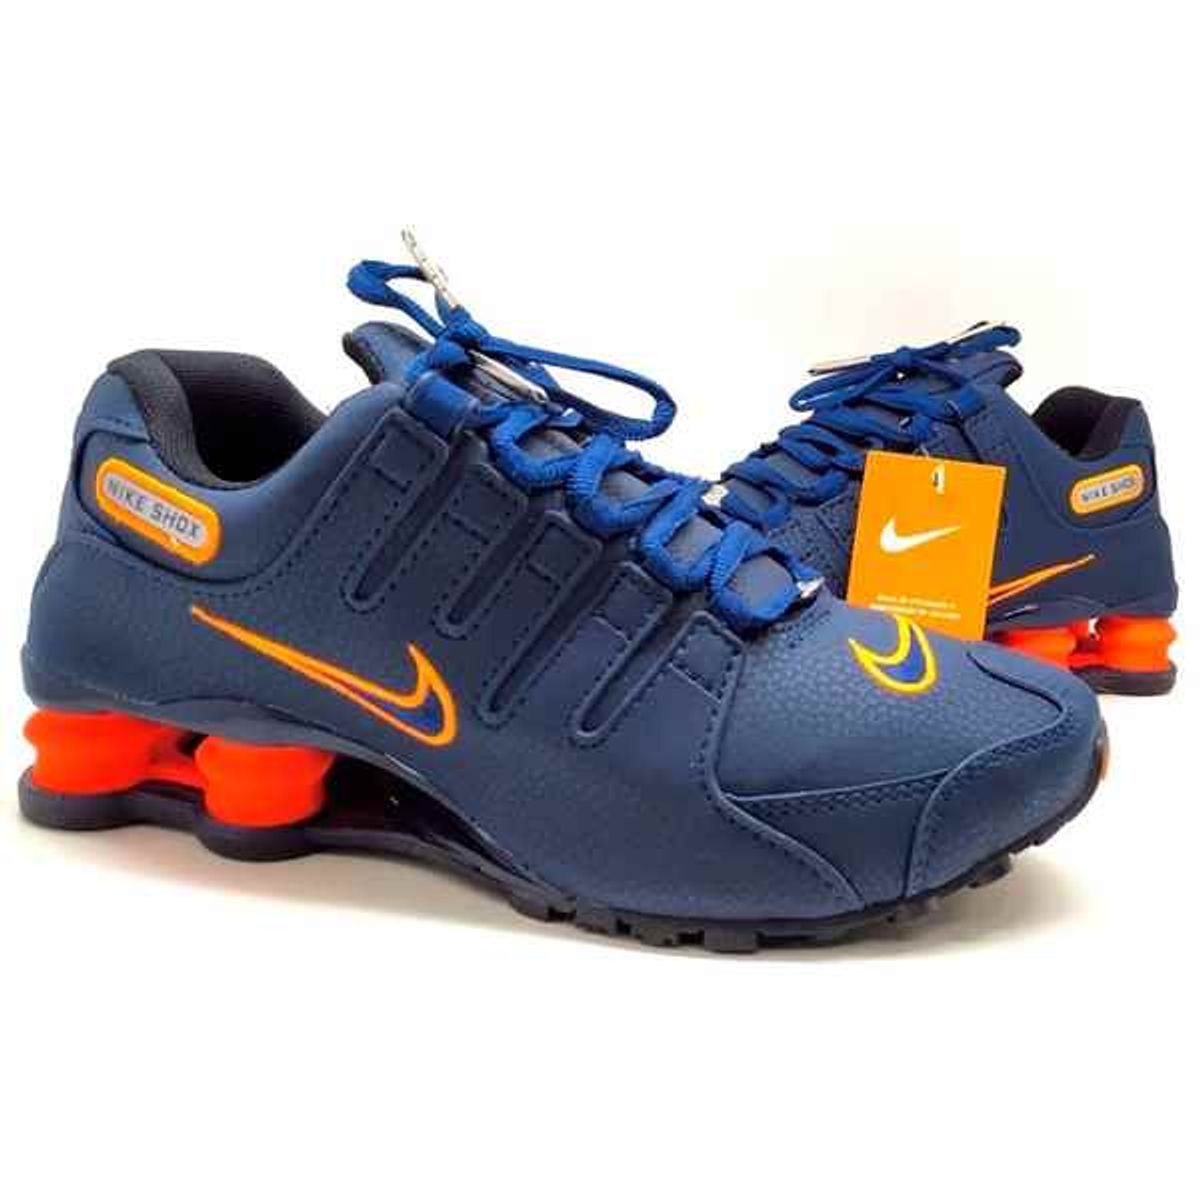 Tenis Nike Shox Nz Masculino Azul Laranja Nike Molas Original Na Caixa A Pronta Entrega